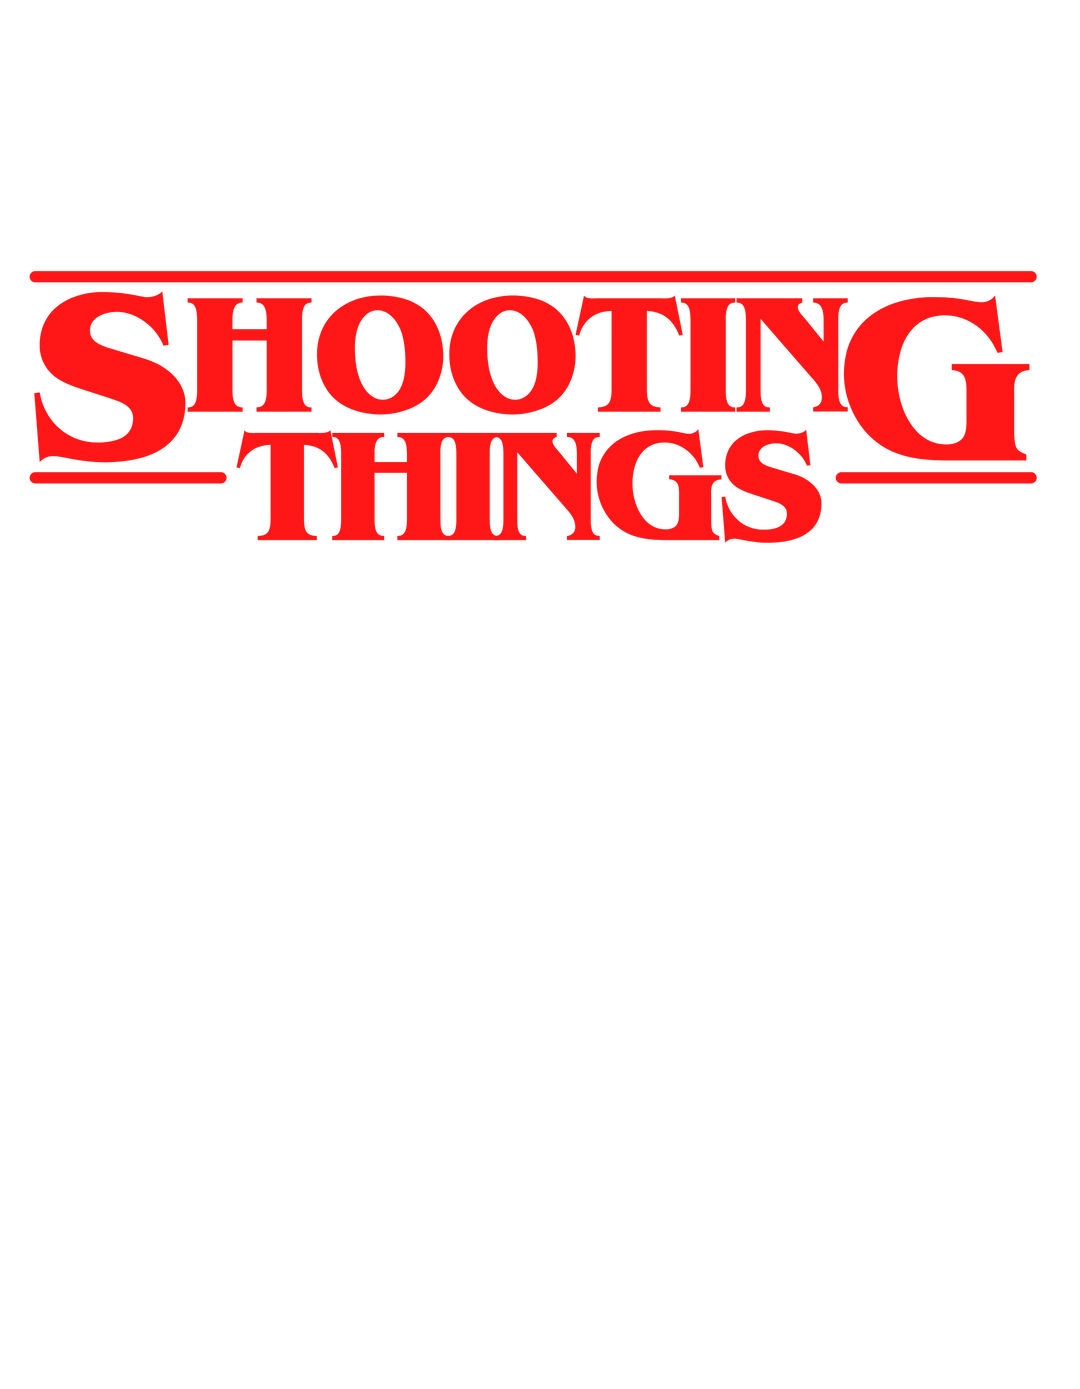 SHOOTING THINGS